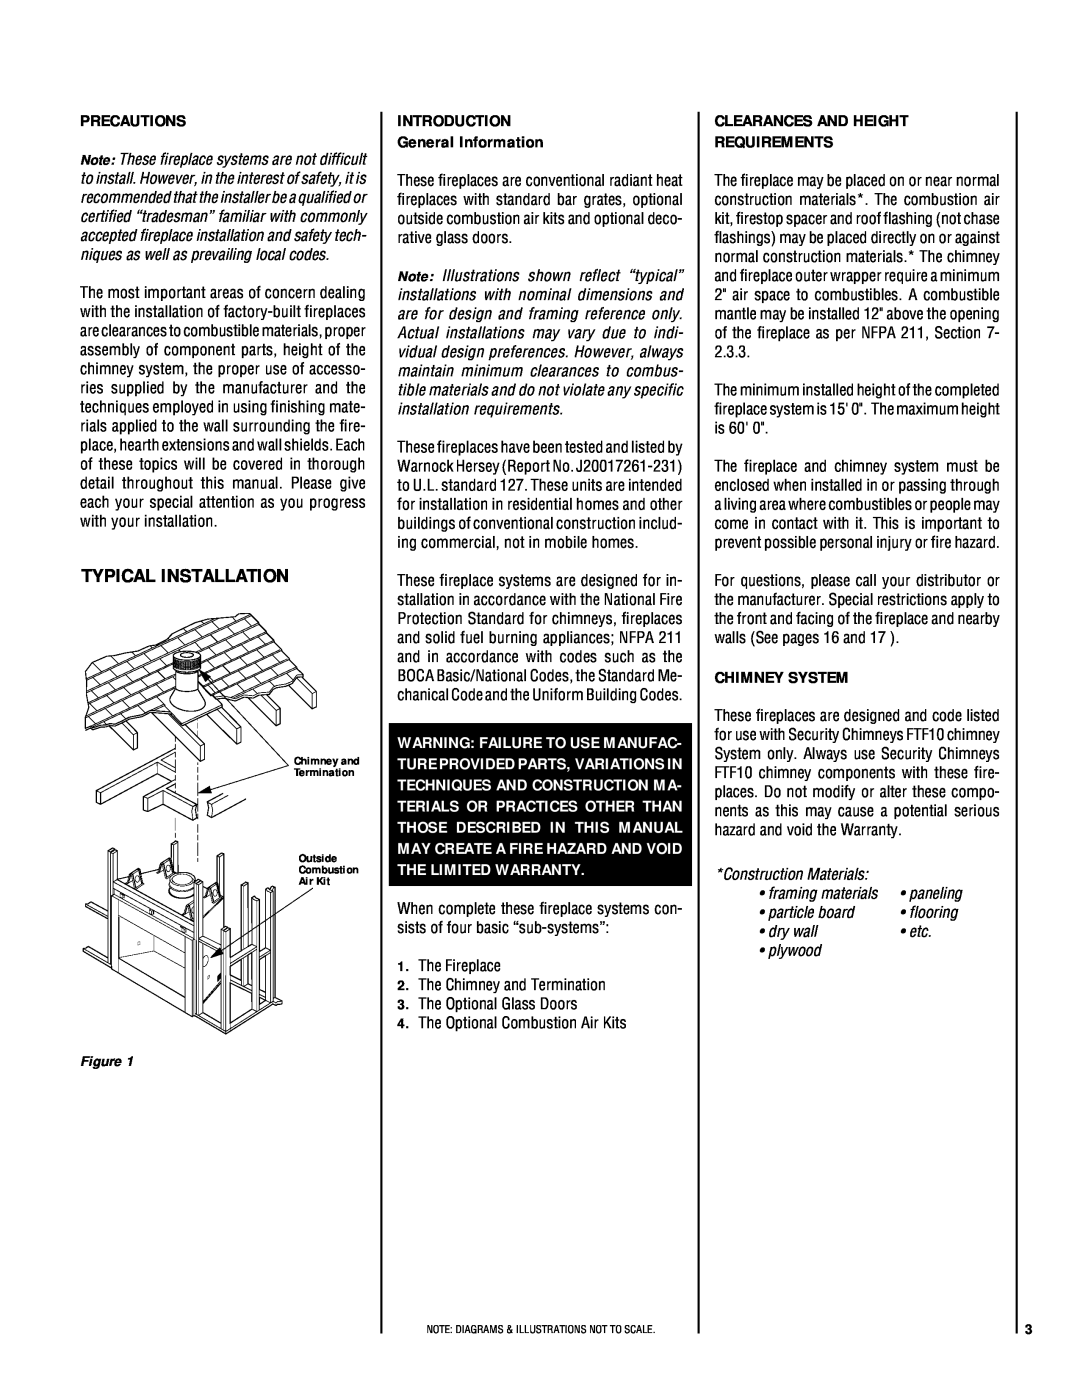 Lennox Hearth LA41CF Typical Installation, Precautions, INTRODUCTION General Information, Chimney System, flooring 